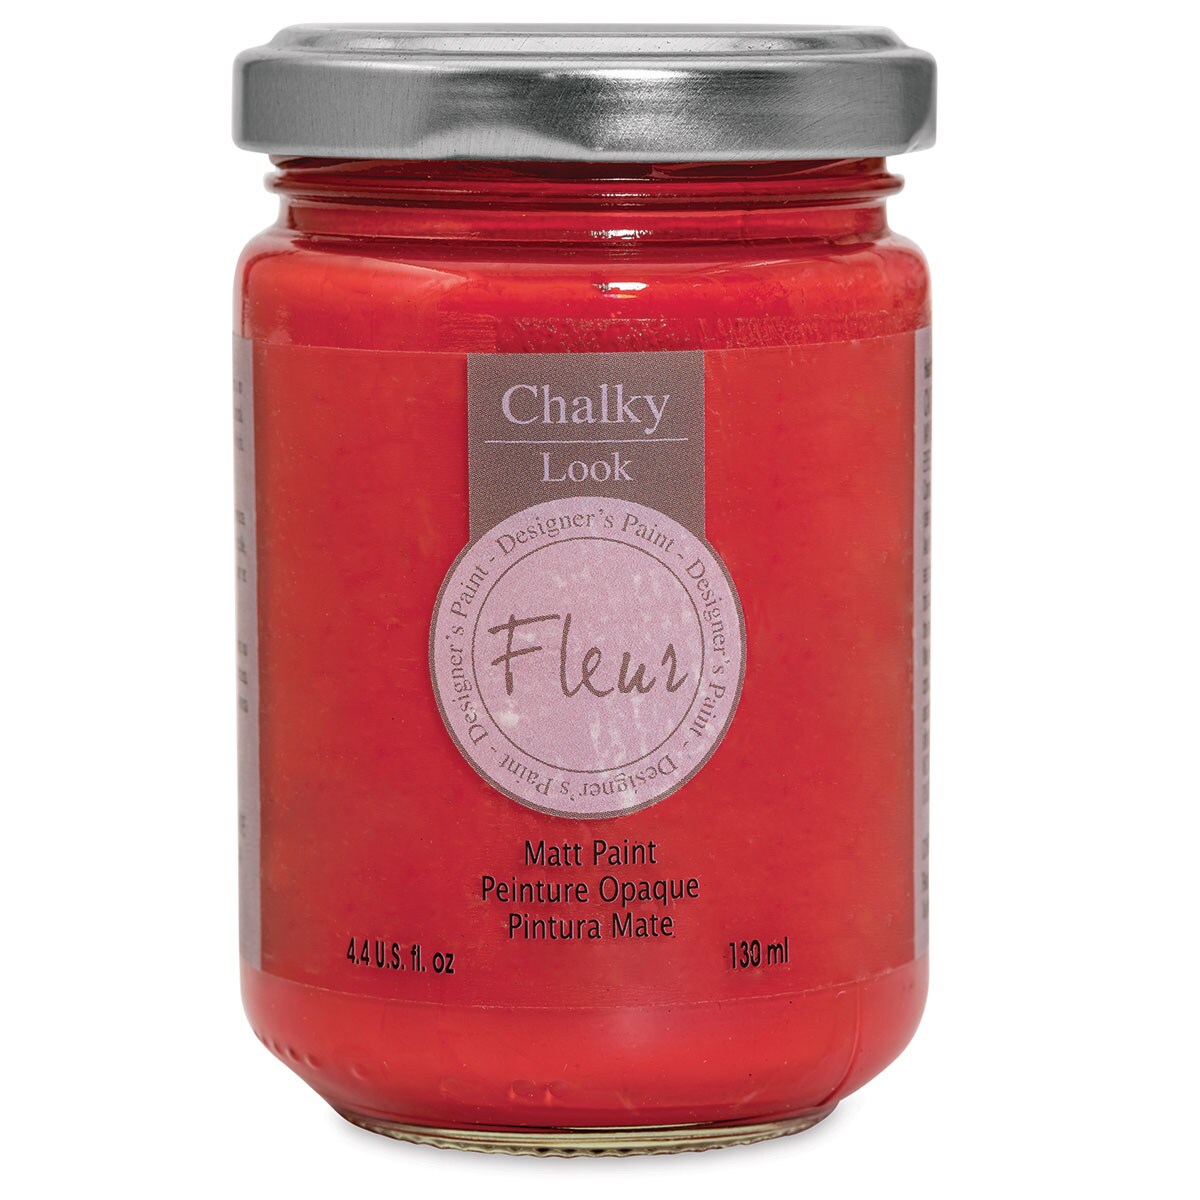 Fleur Chalky Look Paint - Cherry Lips, 4.4 oz jar